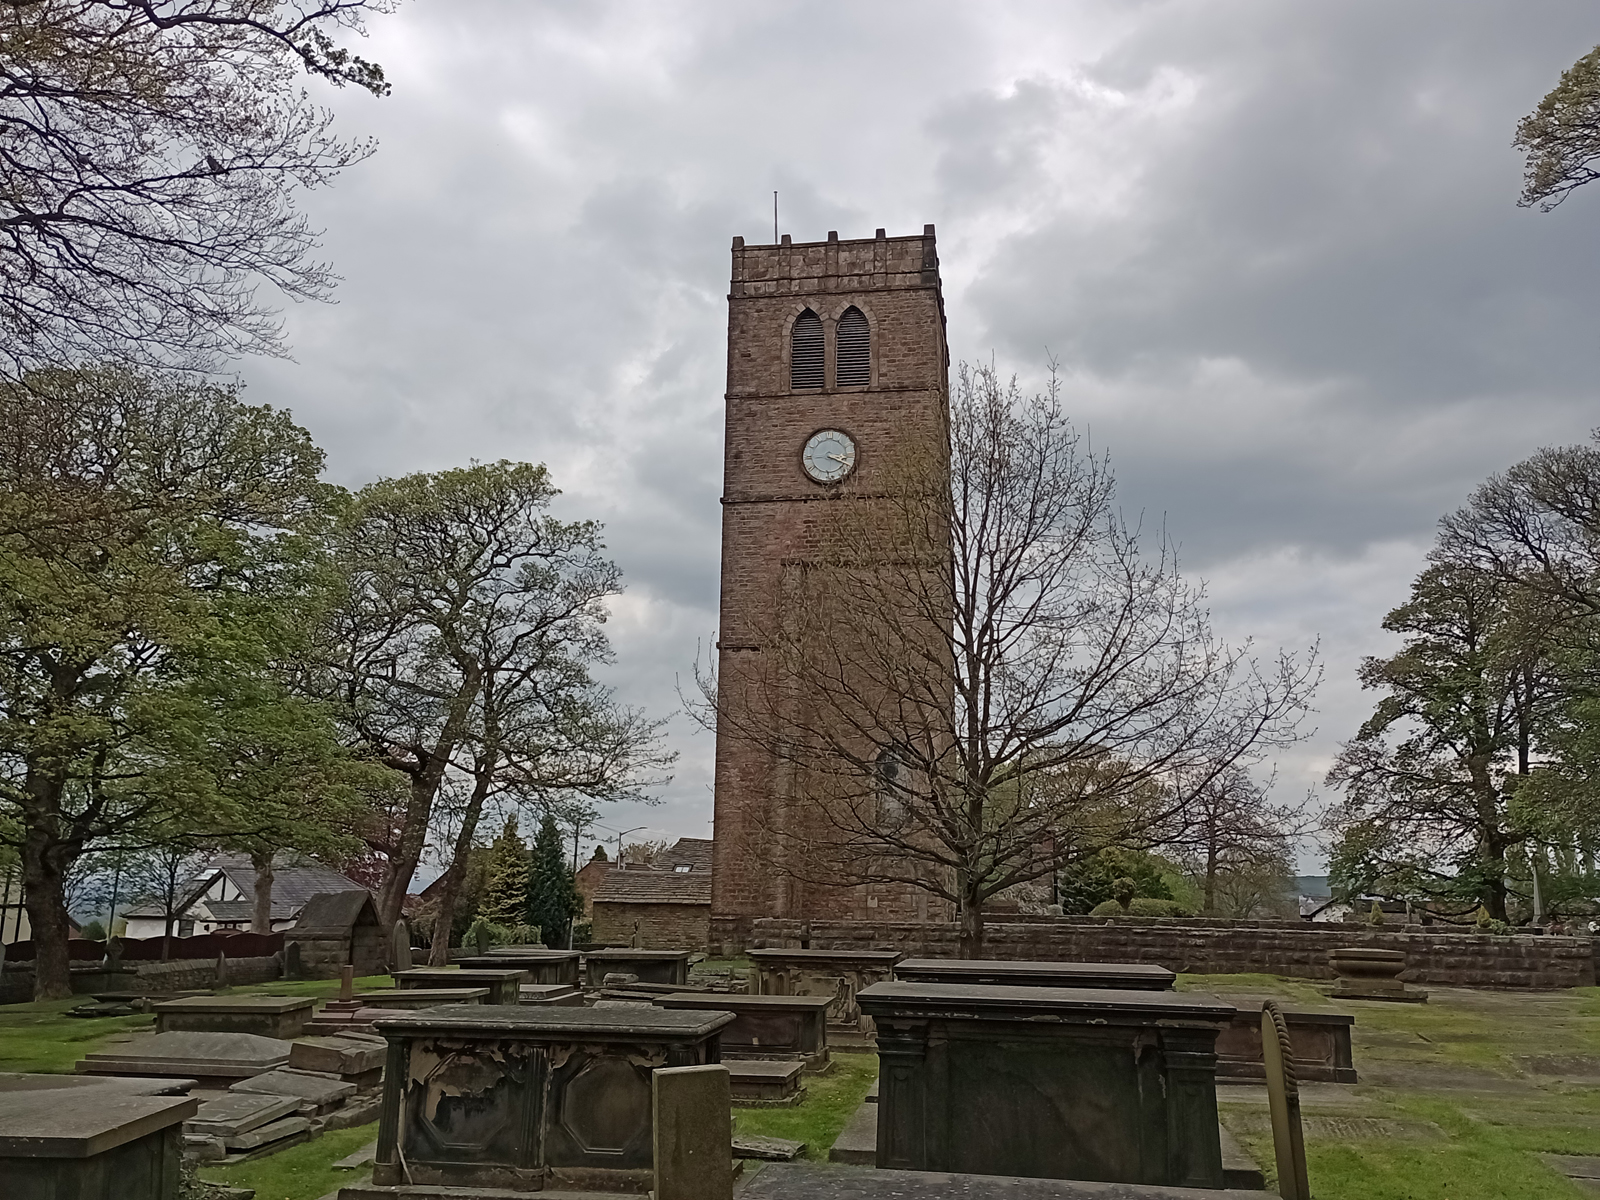 Moto G22 camera sample showing a church tower